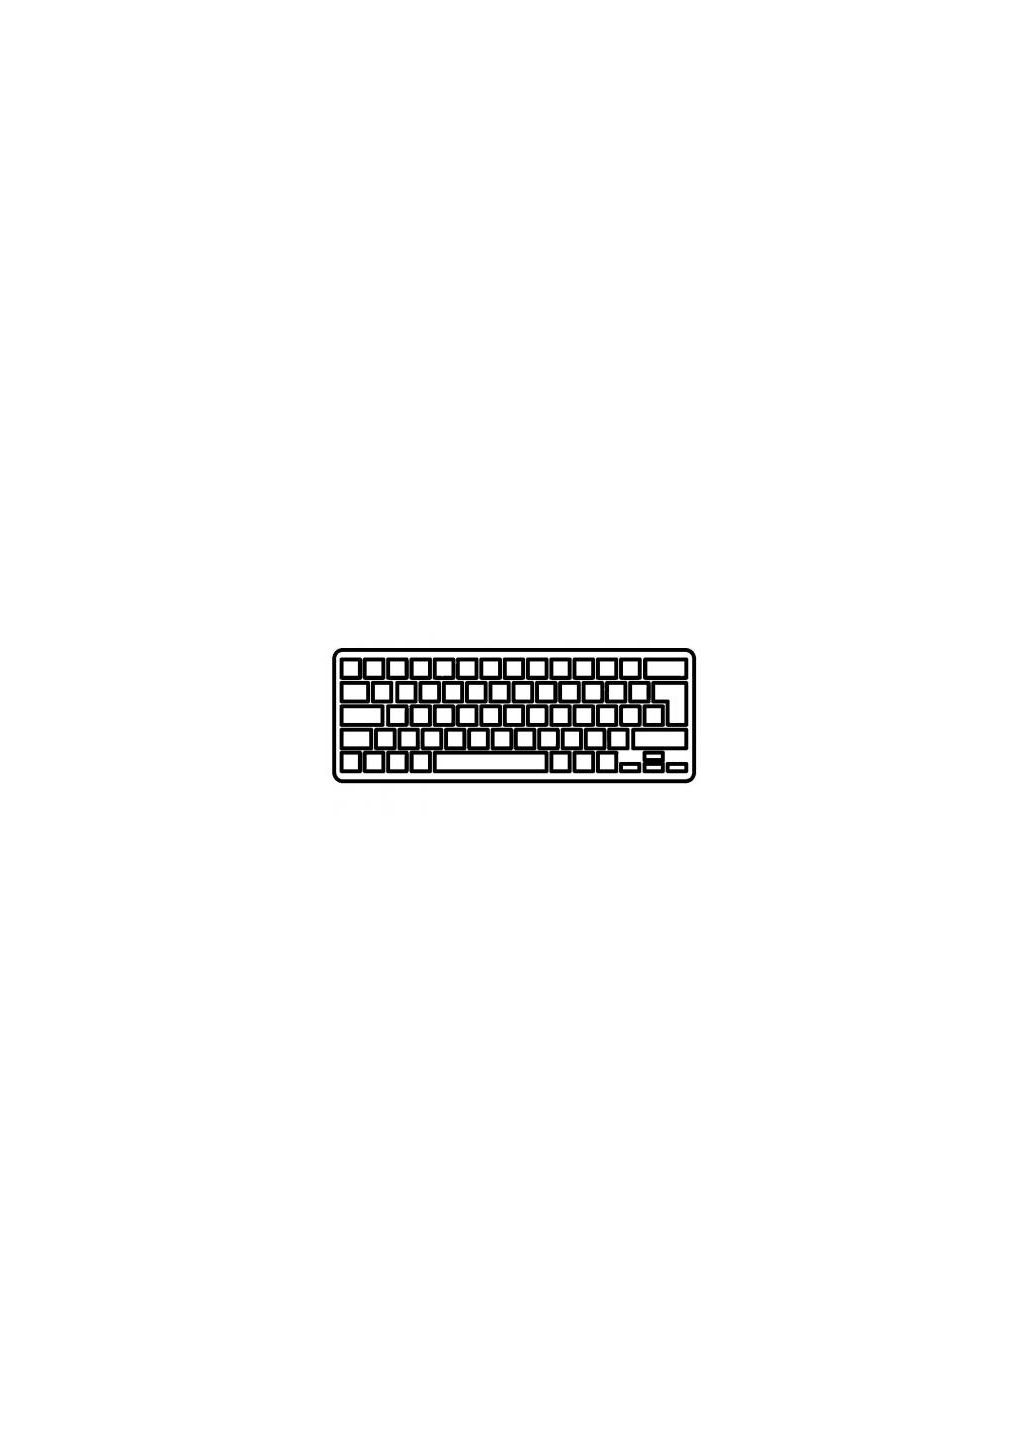 Клавиатура ноутбука Latitude X300/Inspiron 300M Series темносерая UA (A43232) Dell latitude x300/inspiron 300m series темно-серая ua (276707126)